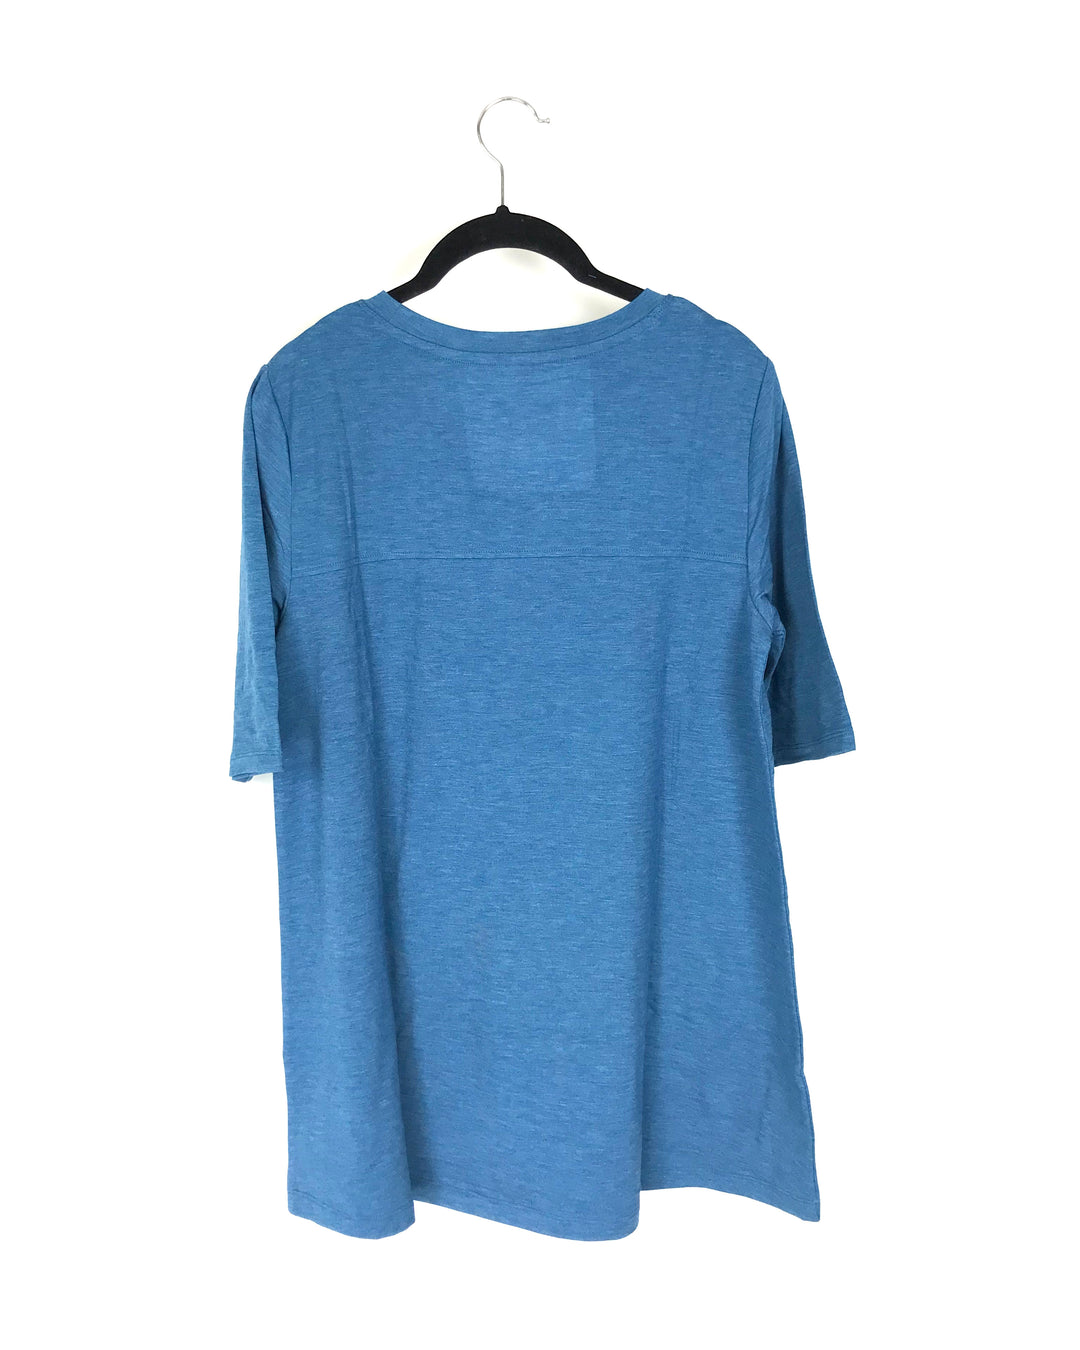 Blue Short Sleeve Top - Small and Medium